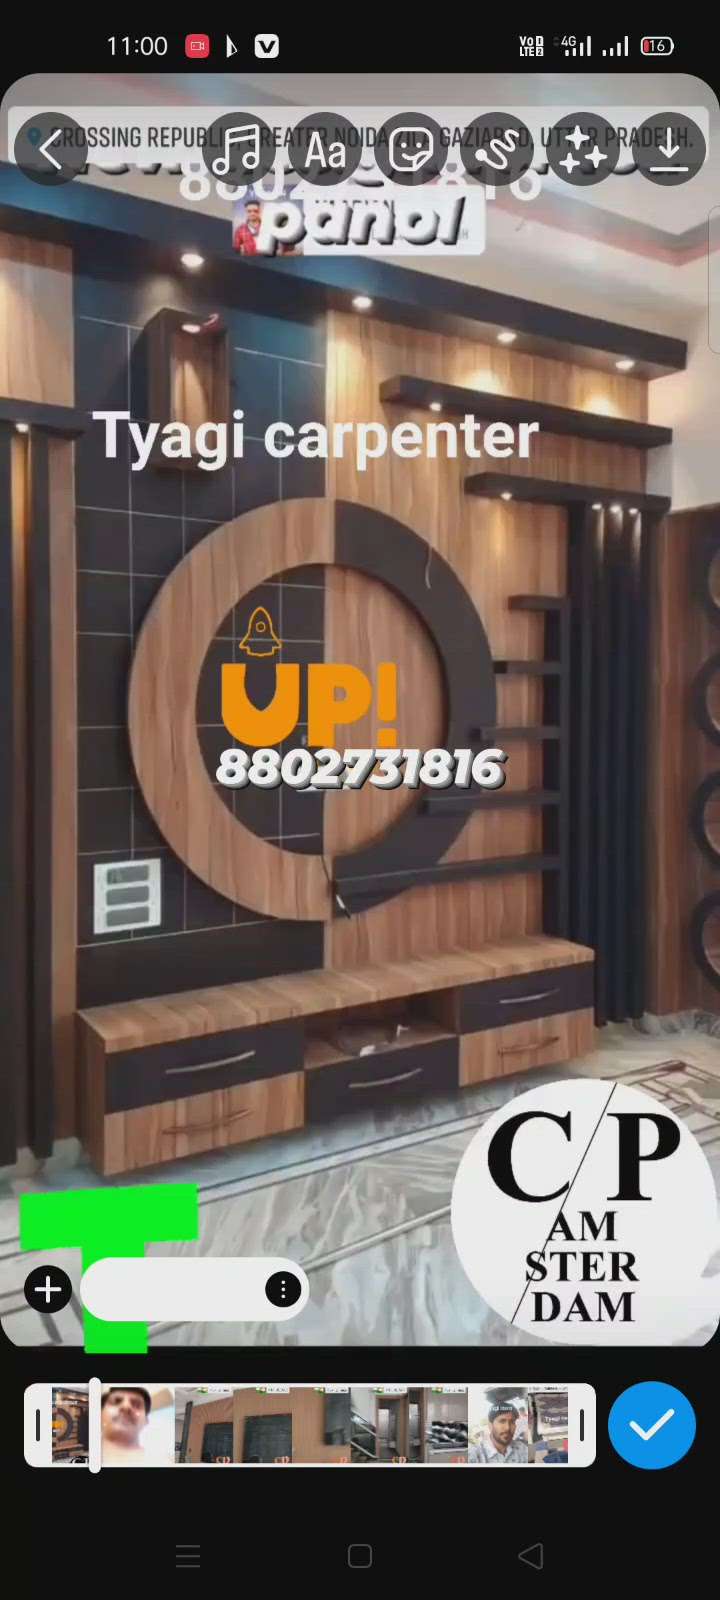 Tyagi carpenter furniture Alwar 880 273 1816 call me